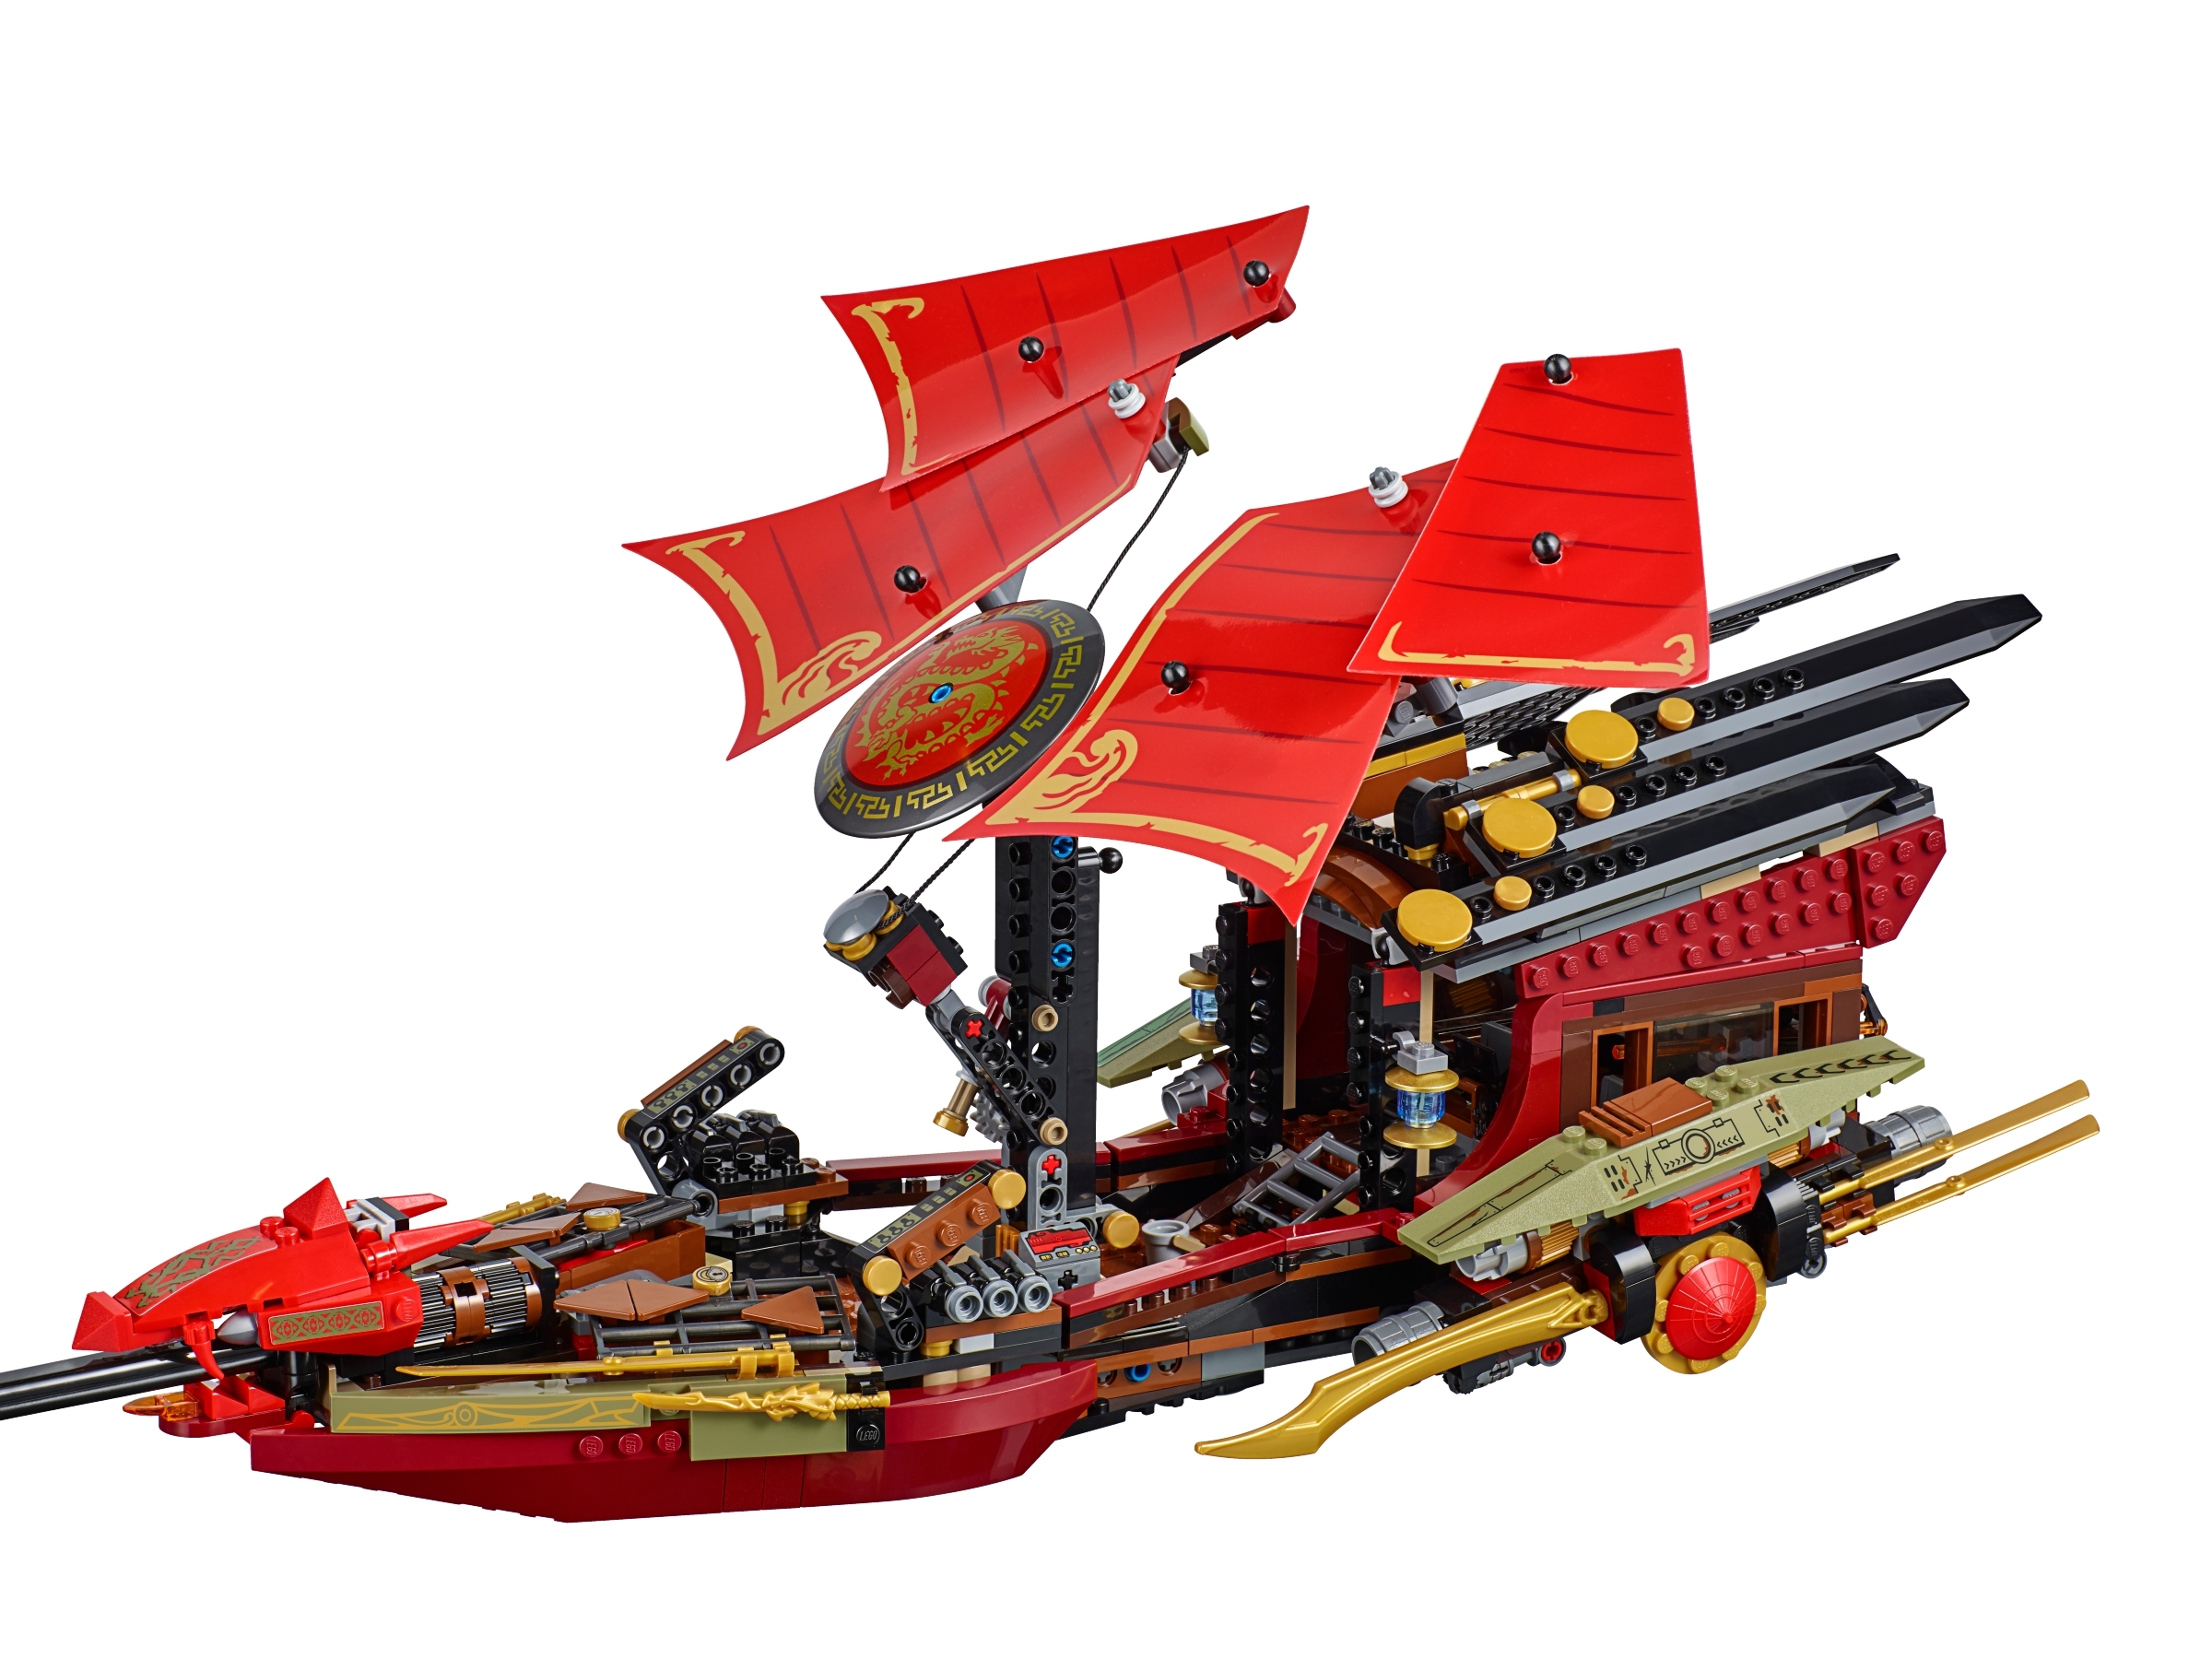 LEGO 2x Ninjago Skreemer Minifigure from set 70738 NEW!!!!! 